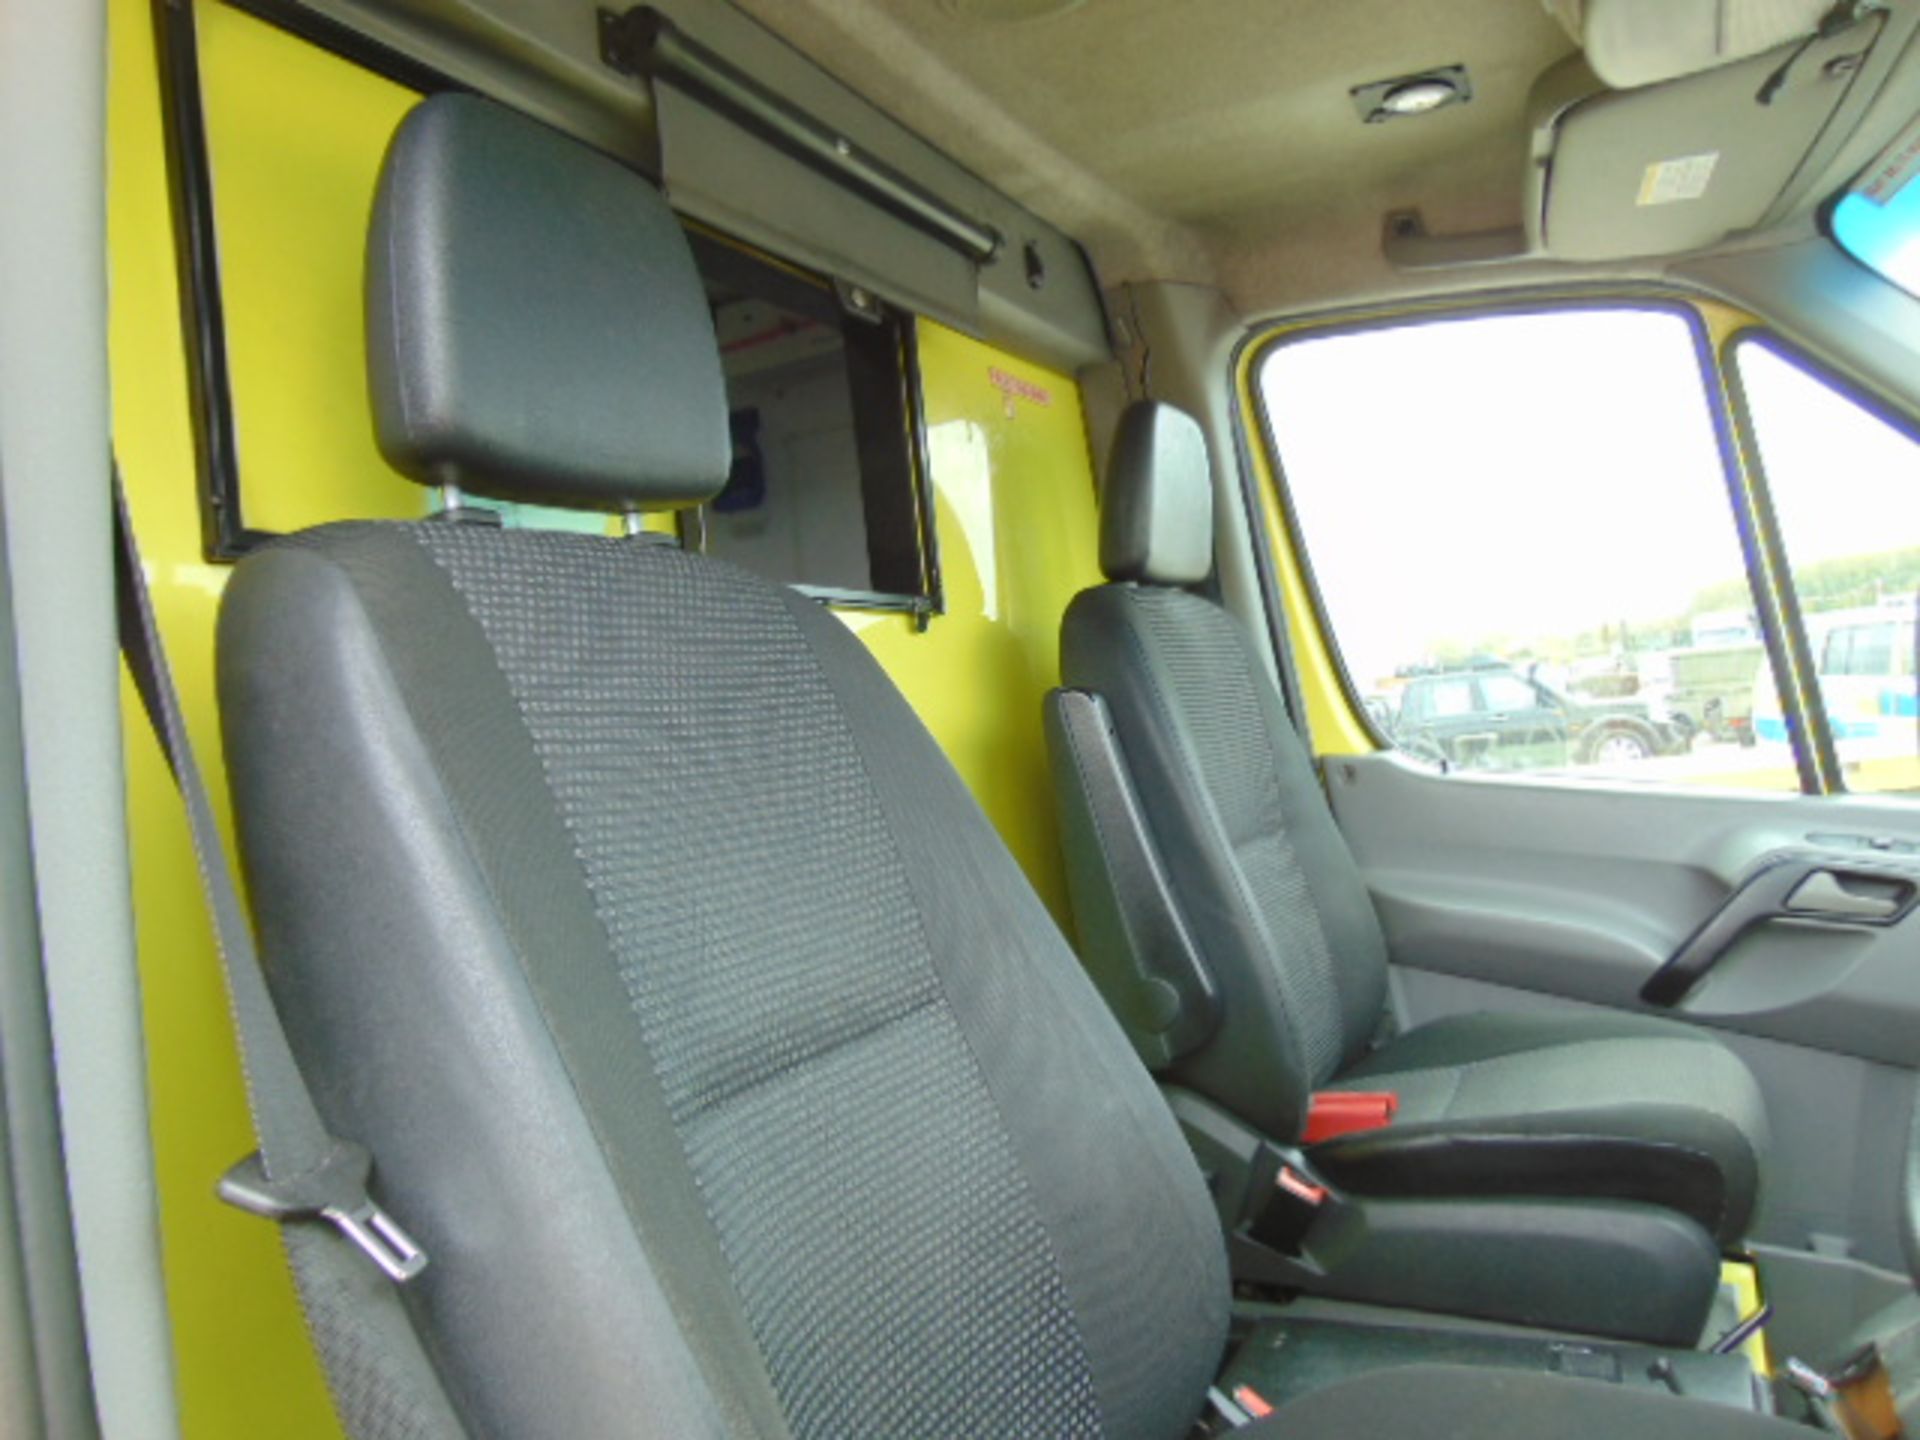 Mercedes Sprinter 515 CDI Turbo diesel ambulance - Image 12 of 20